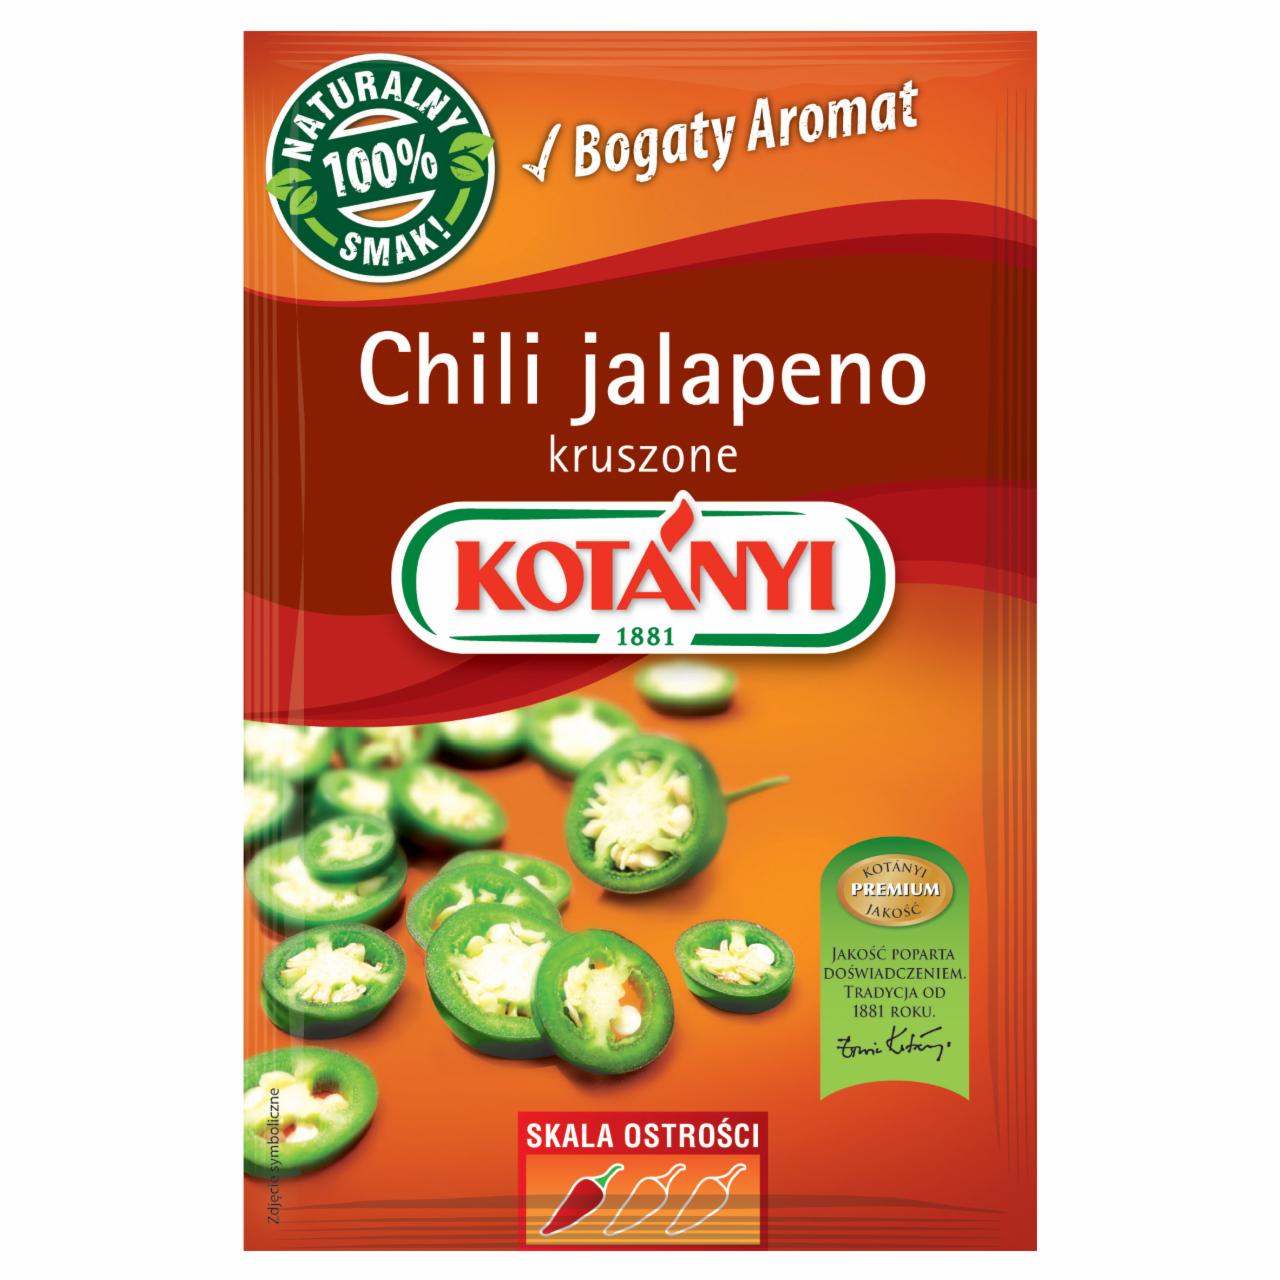 Zdjęcia - Kotányi Chili jalapeno kruszone 8 g